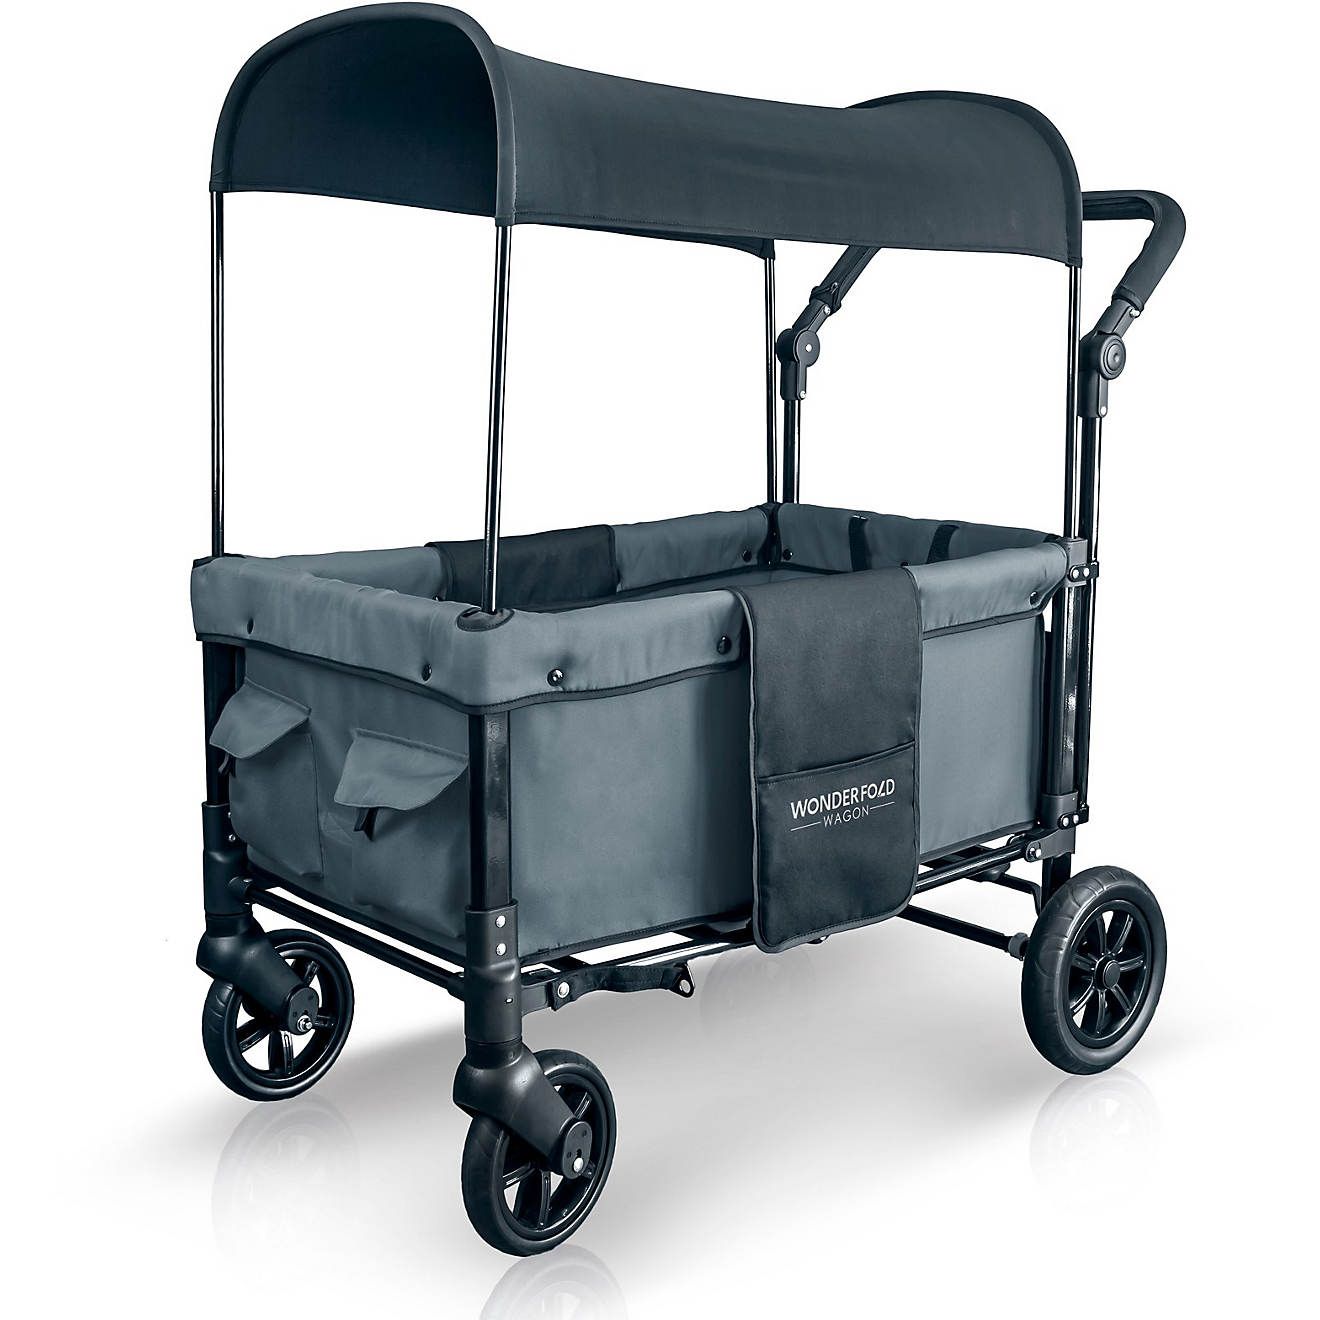 Wonderfold Wagon W1 Double Stroller Wagon | Academy | Academy Sports + Outdoors